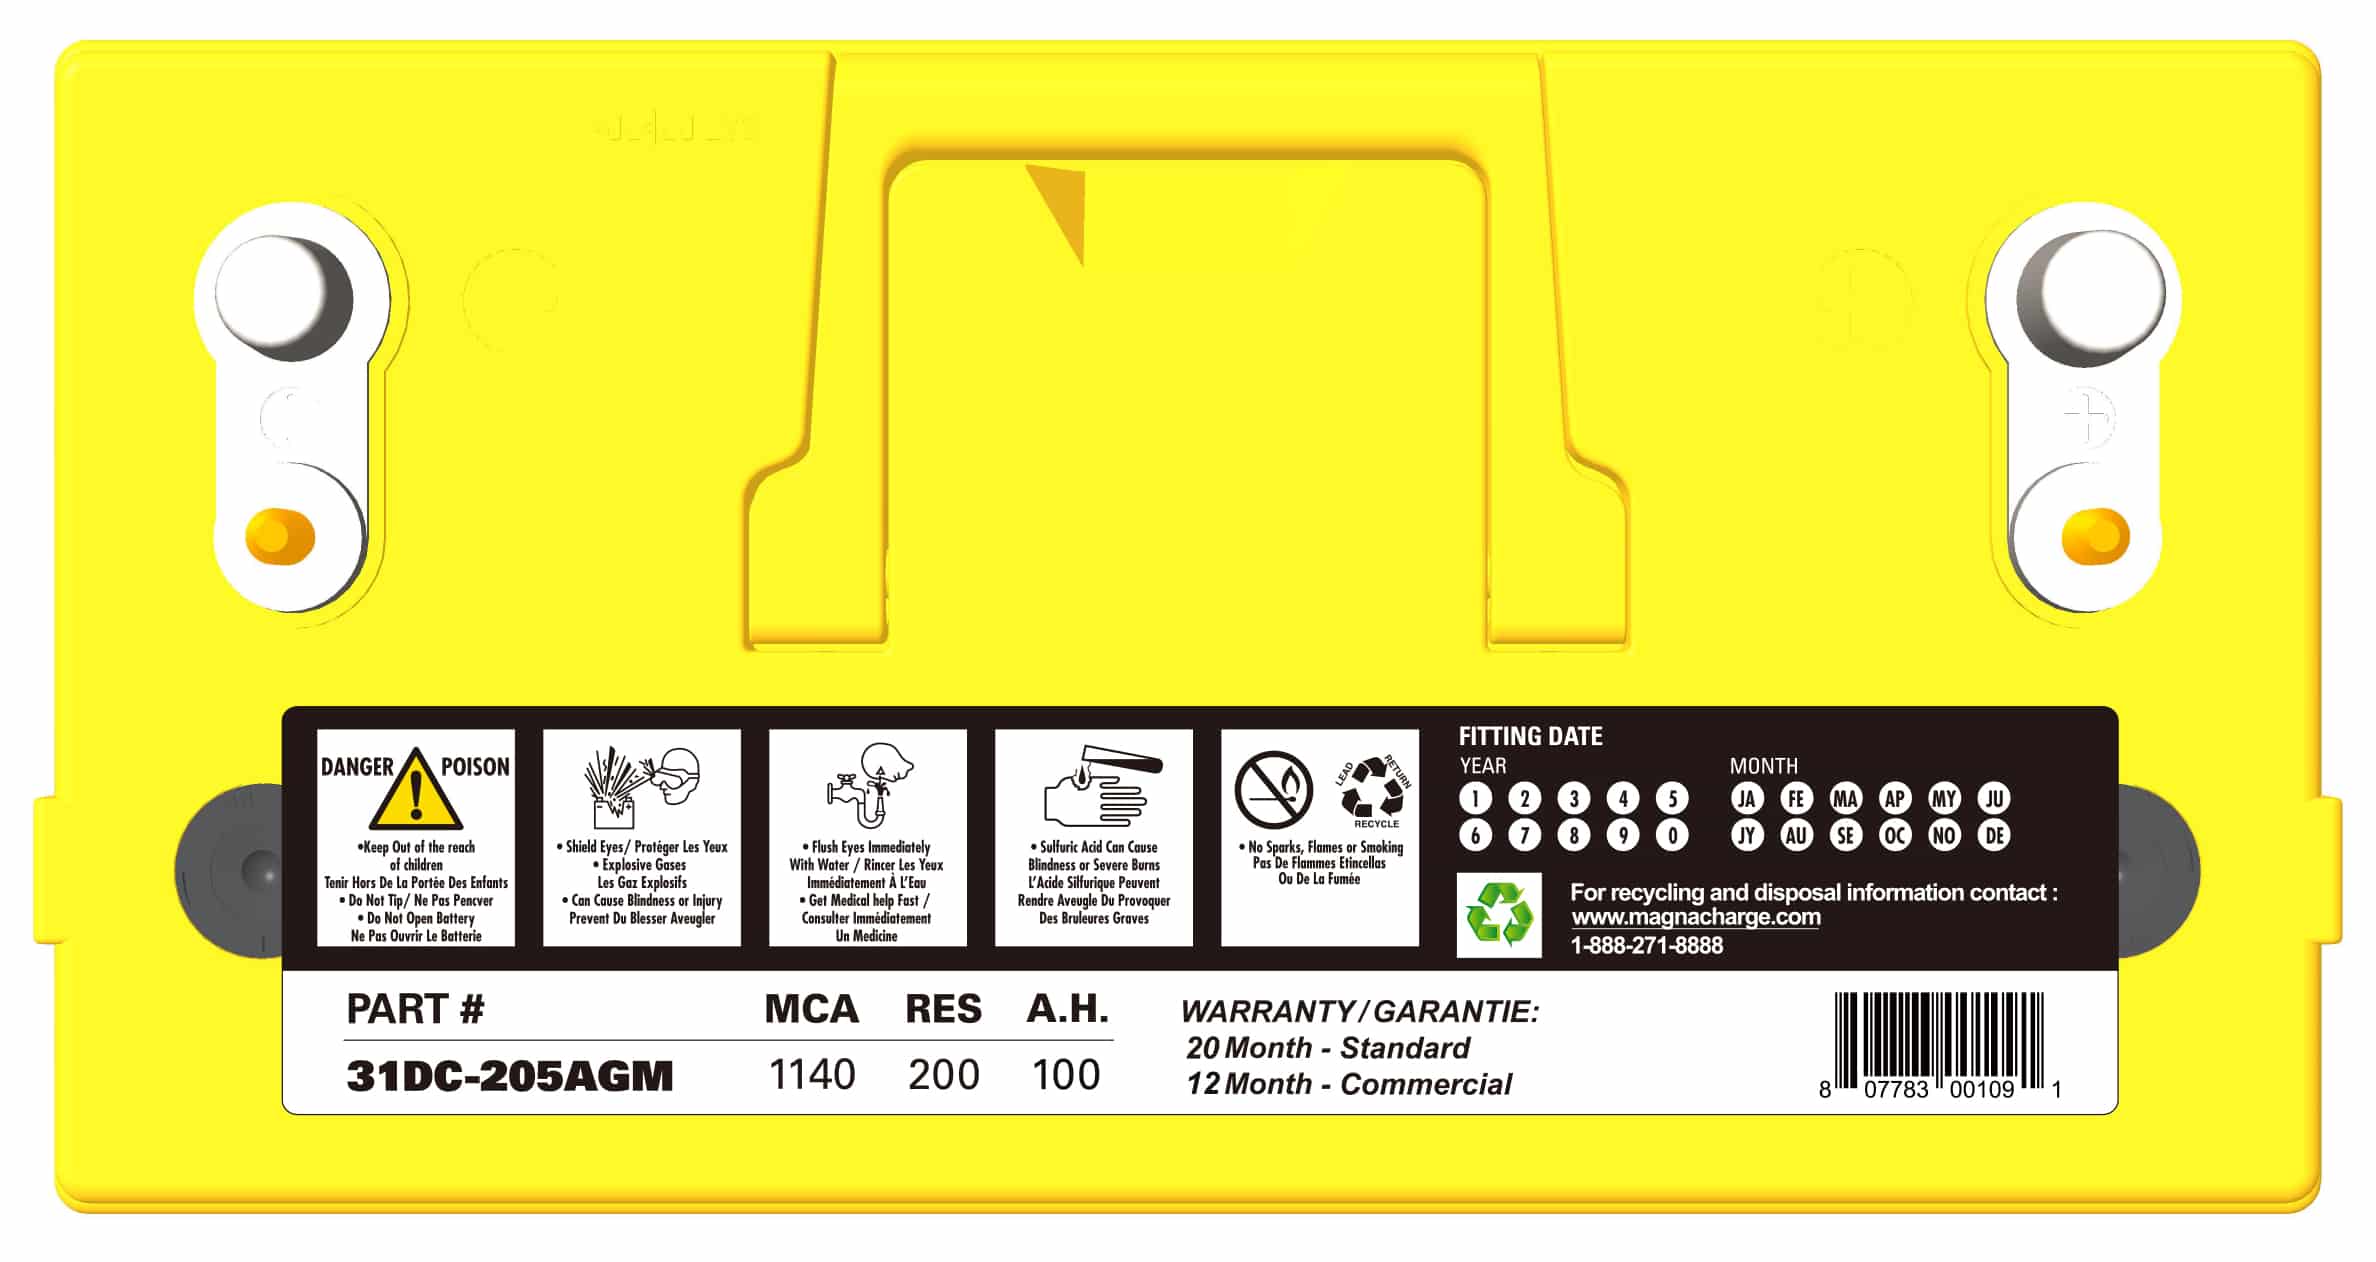 Magnacharge Group 31 Deep Cycle Battery - AGM - Lakehead Inkjet & Toner